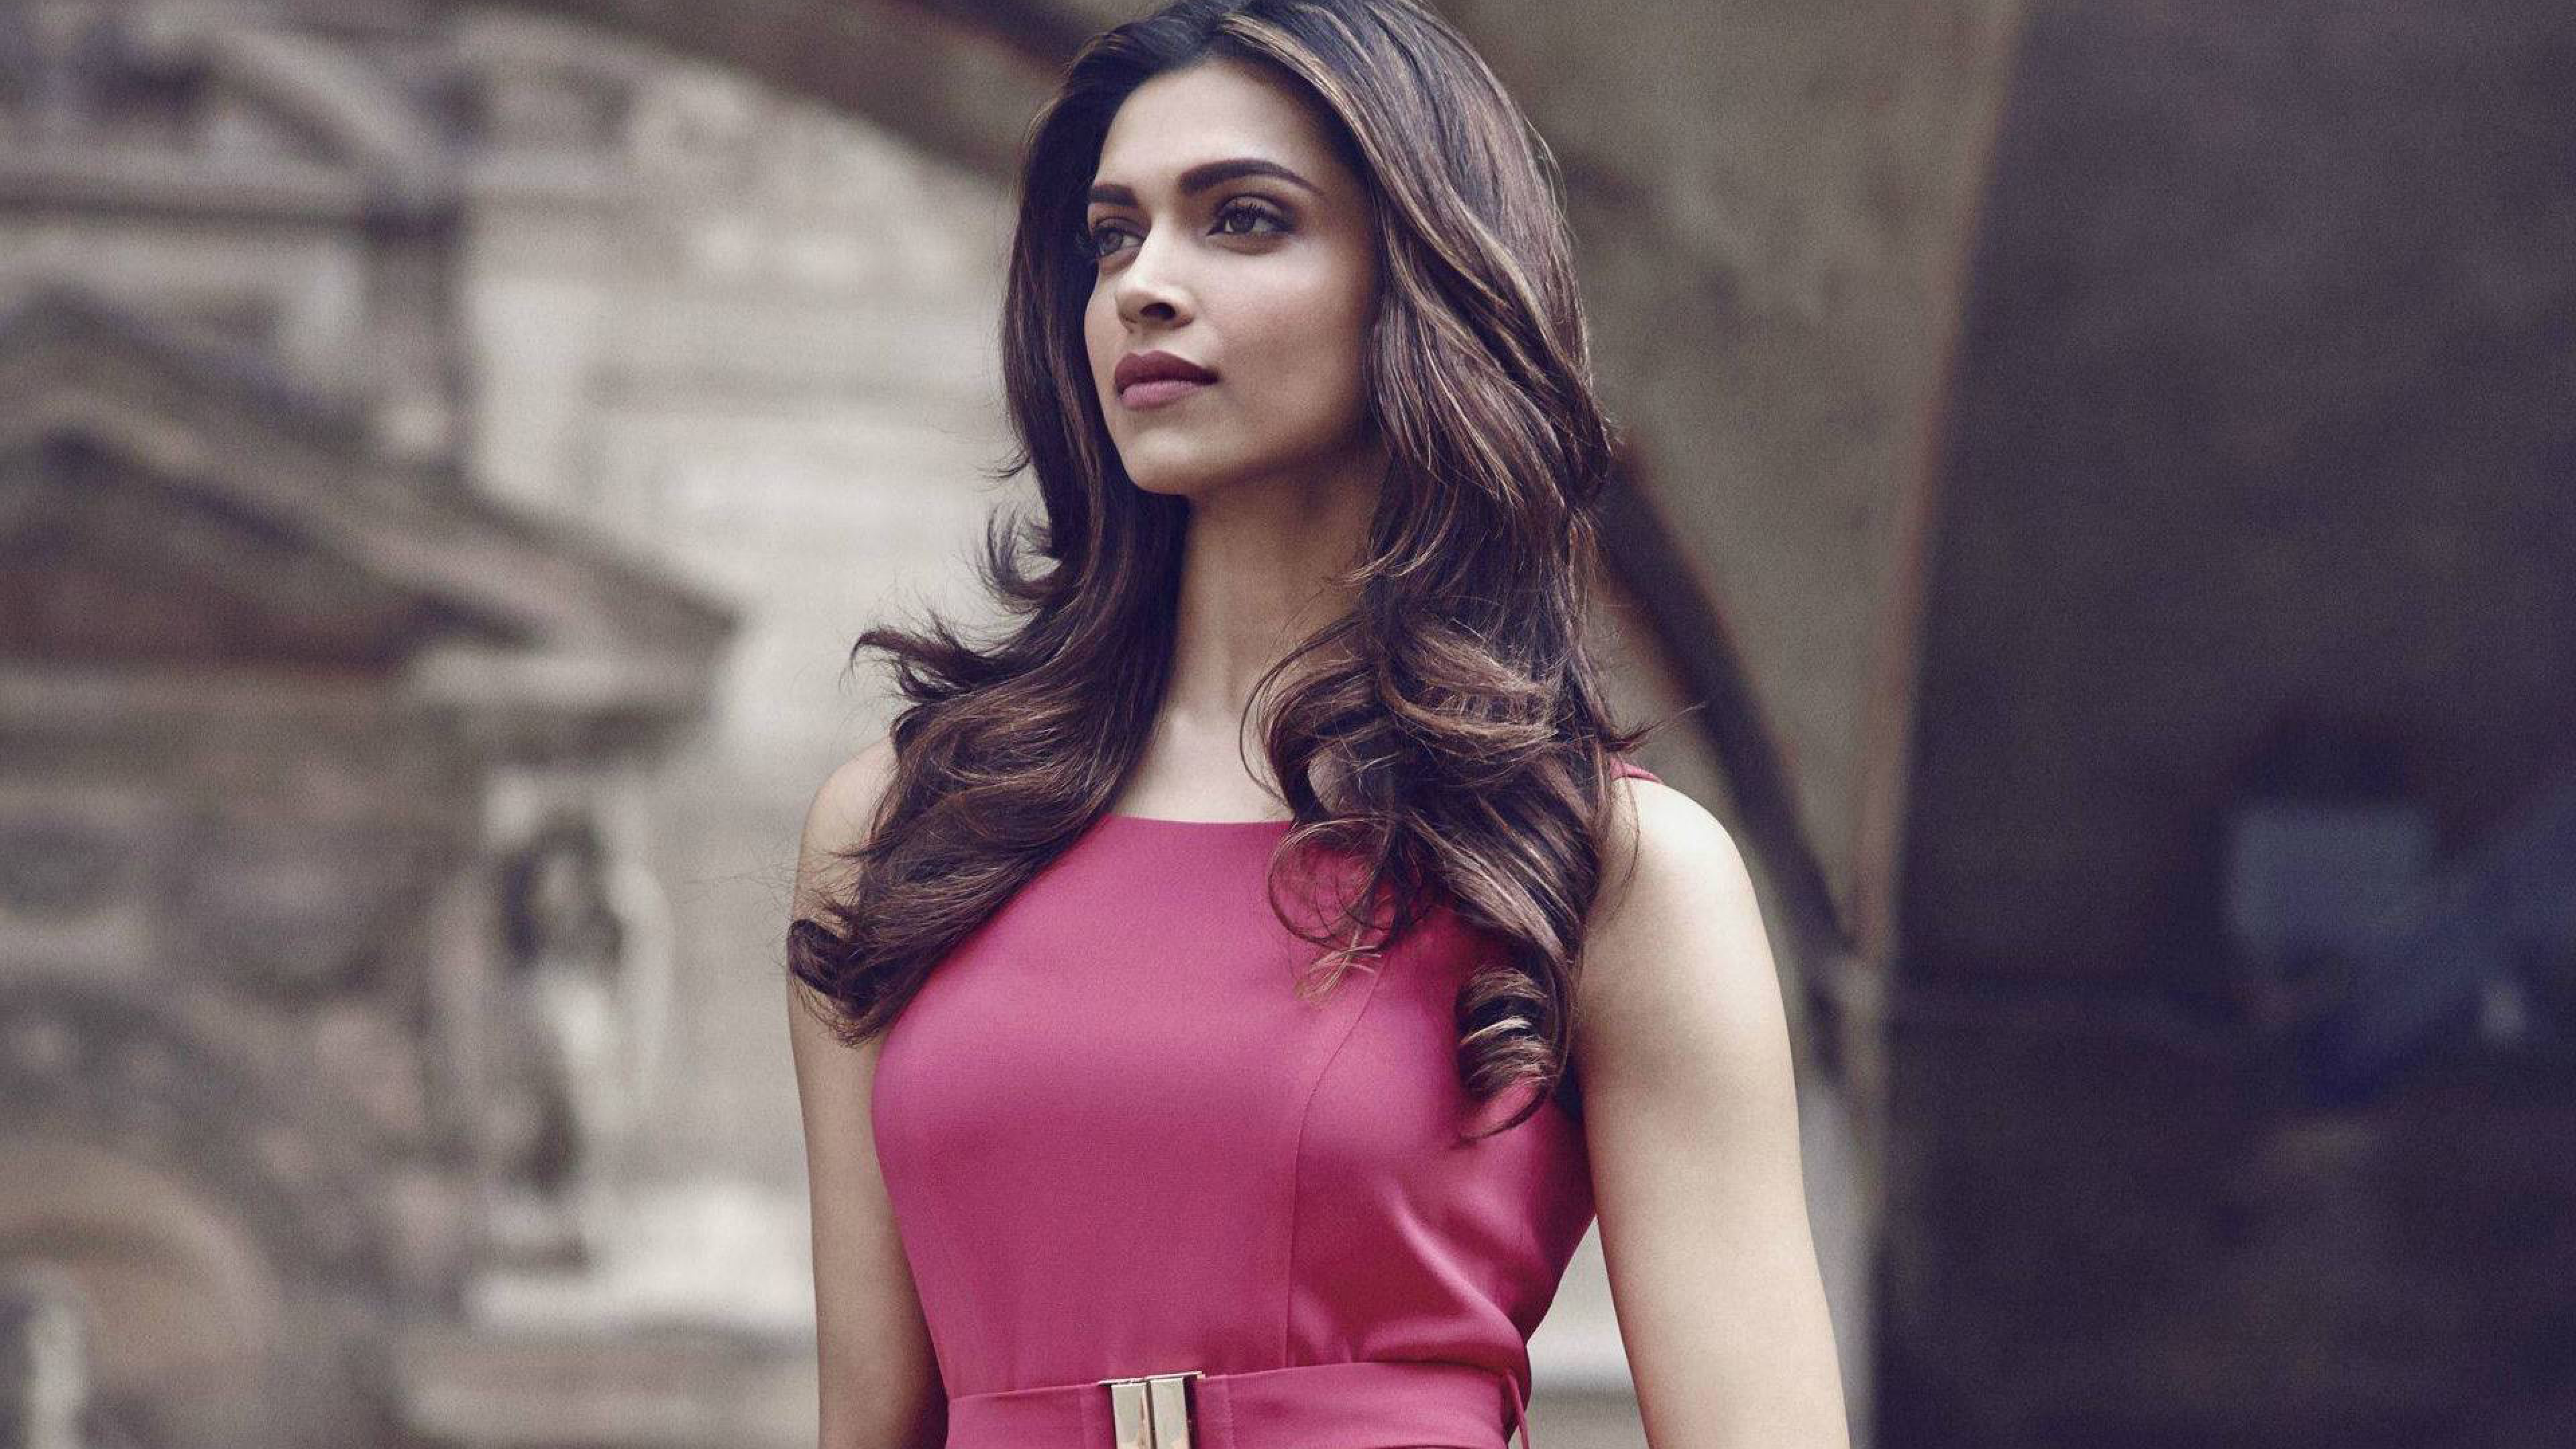 Full Hd Wallpapers Bollywood Actress Wallpaper - Deepika Padukone In Pink  Dress - 1366x768 Wallpaper 